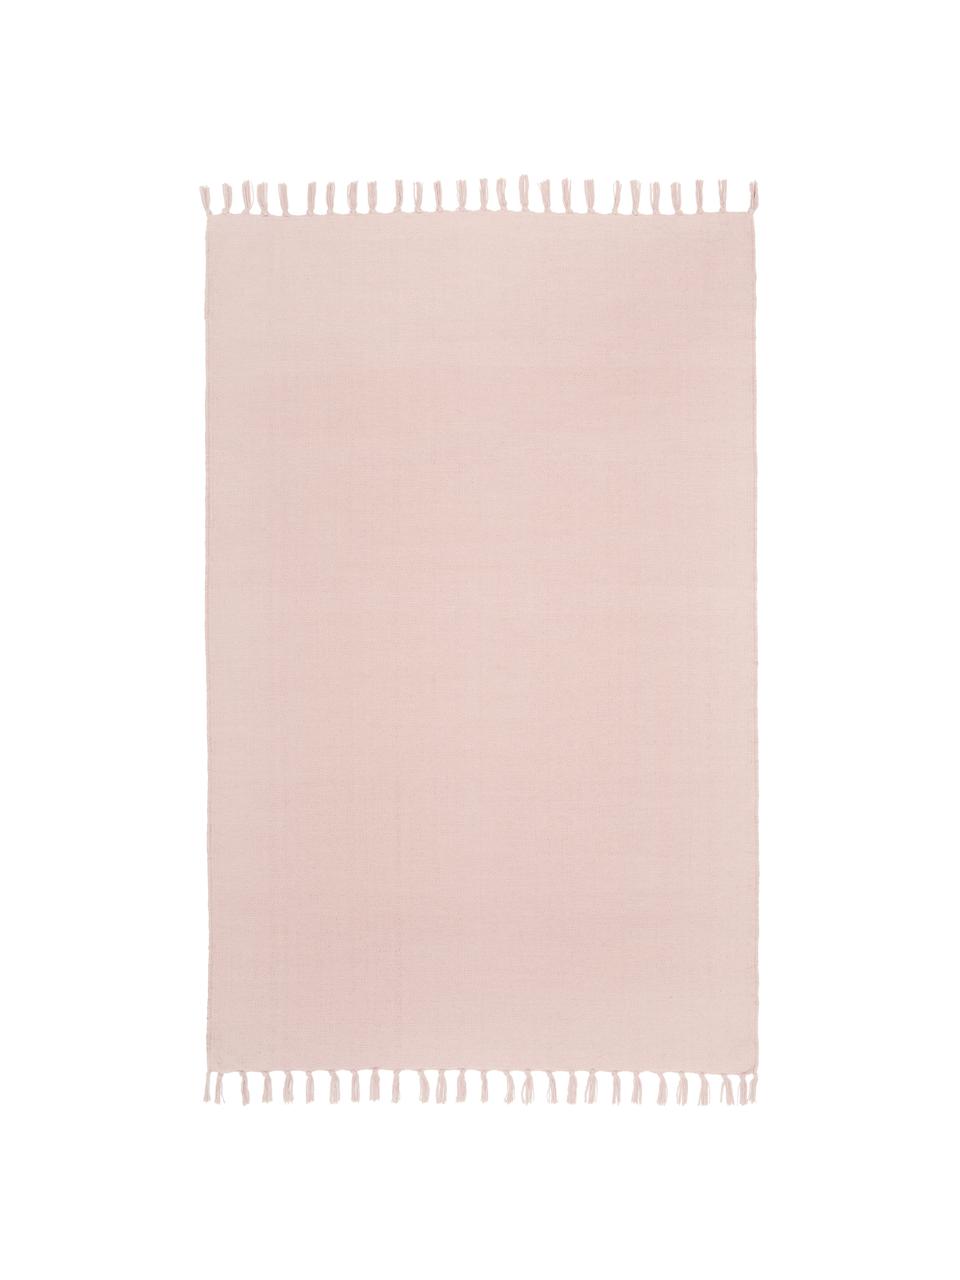 Dun  katoenen vloerkleed Agneta in roze, handgeweven, 100% katoen, Roze, B 160 x L 230 cm (maat M)